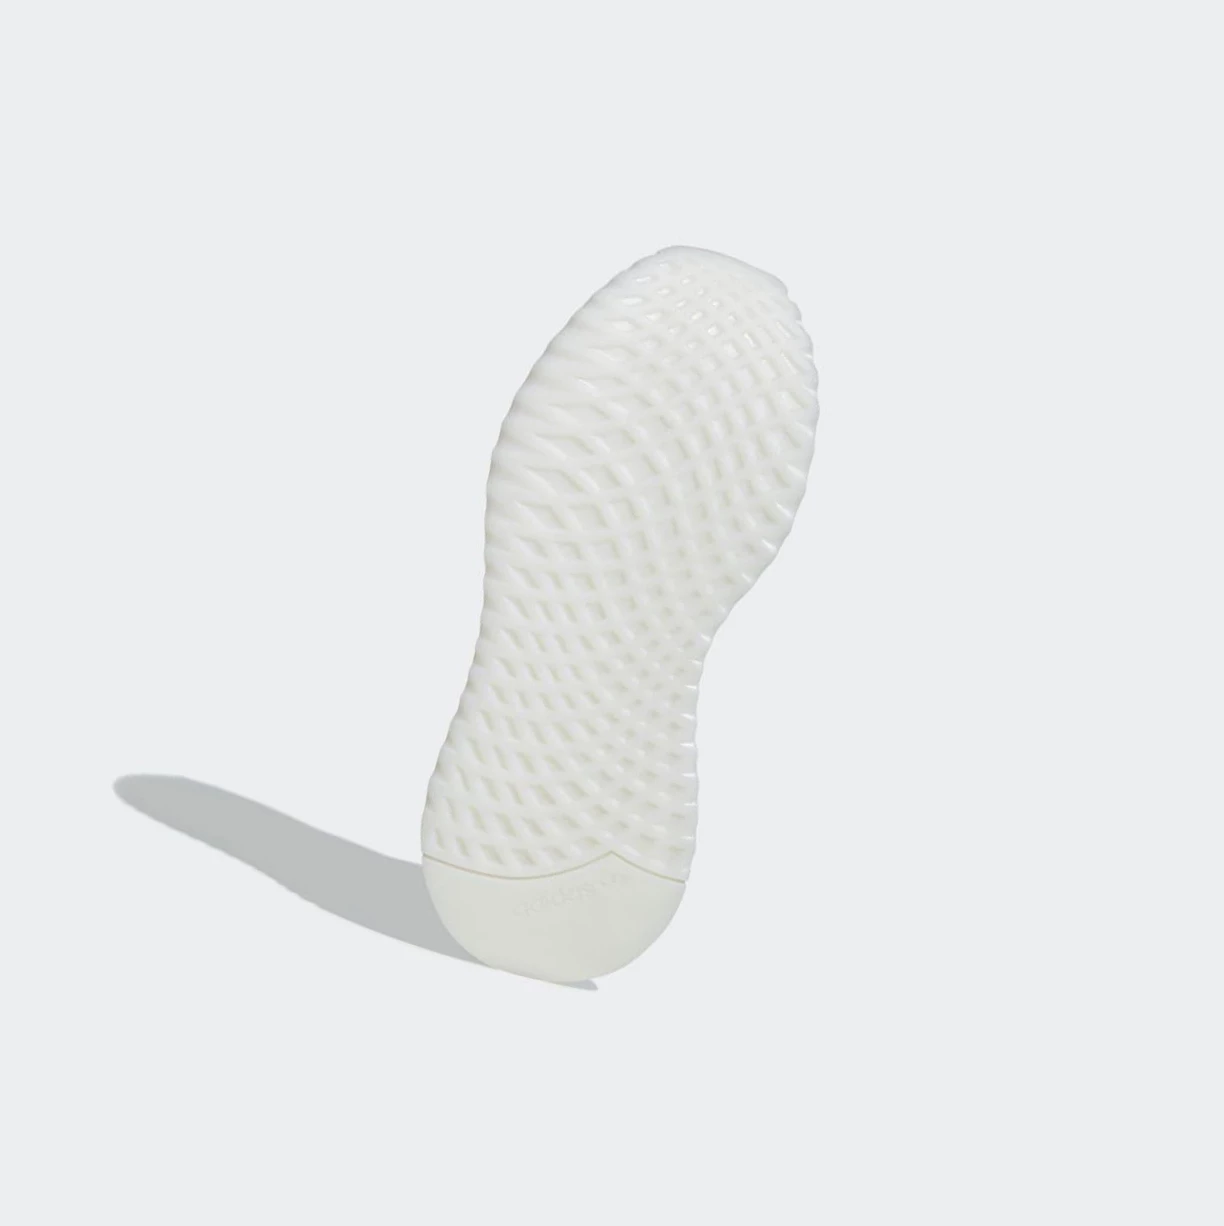 Originálne Topánky Adidas U_Path X Damske Biele | 107SKBOIPXR